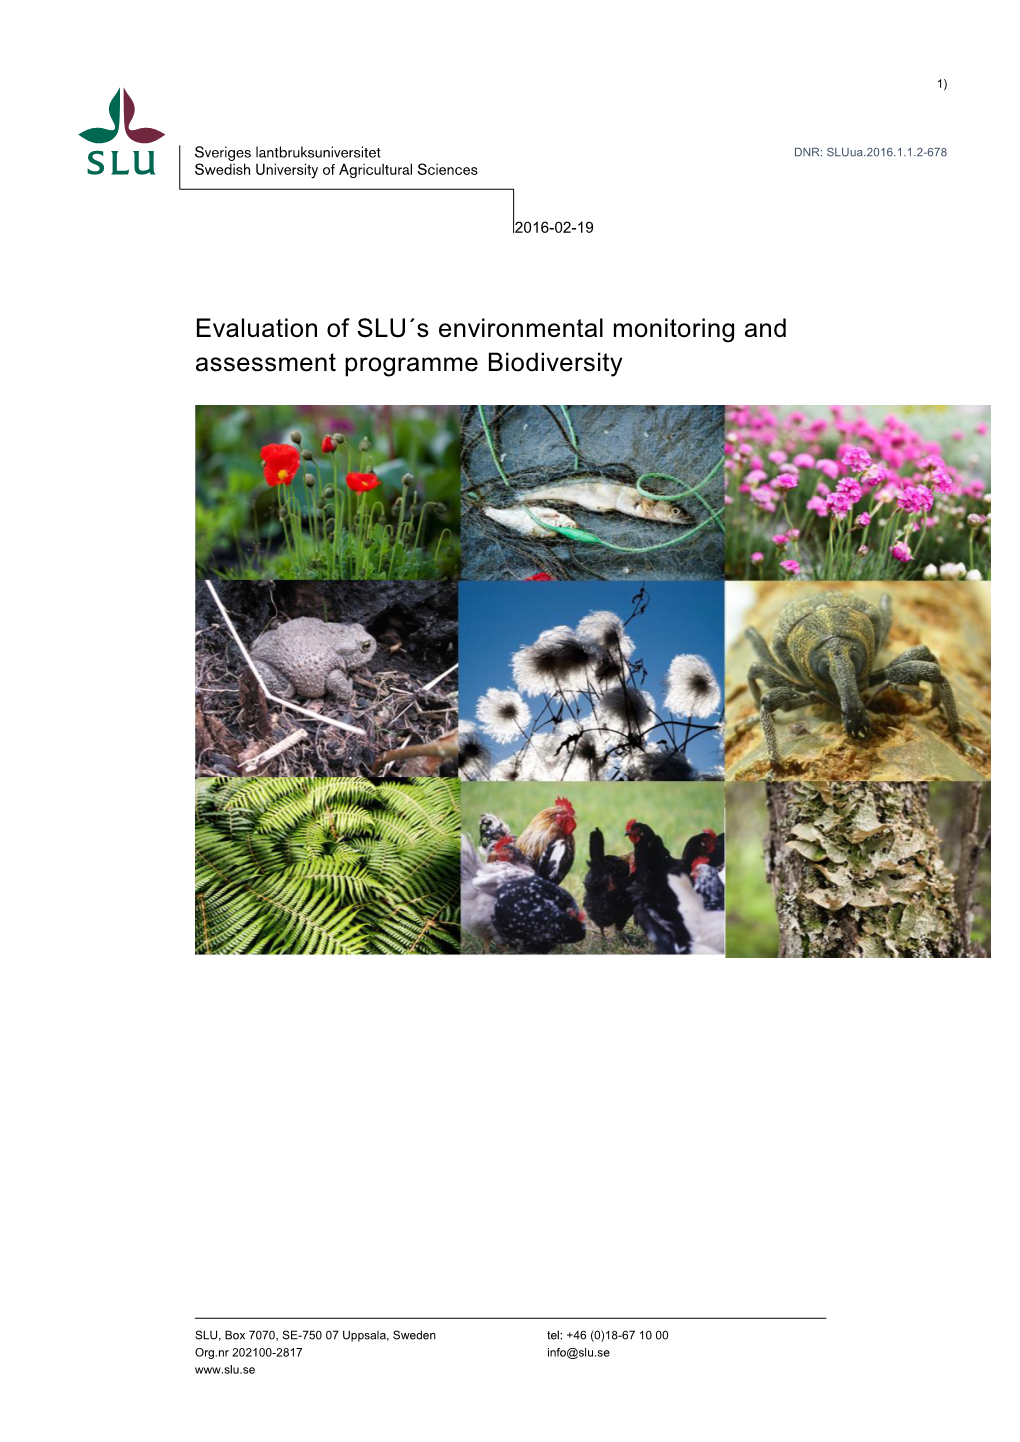 Evaluation of SLU´S Environmental Monitoring and Assessment Programme Biodiversity